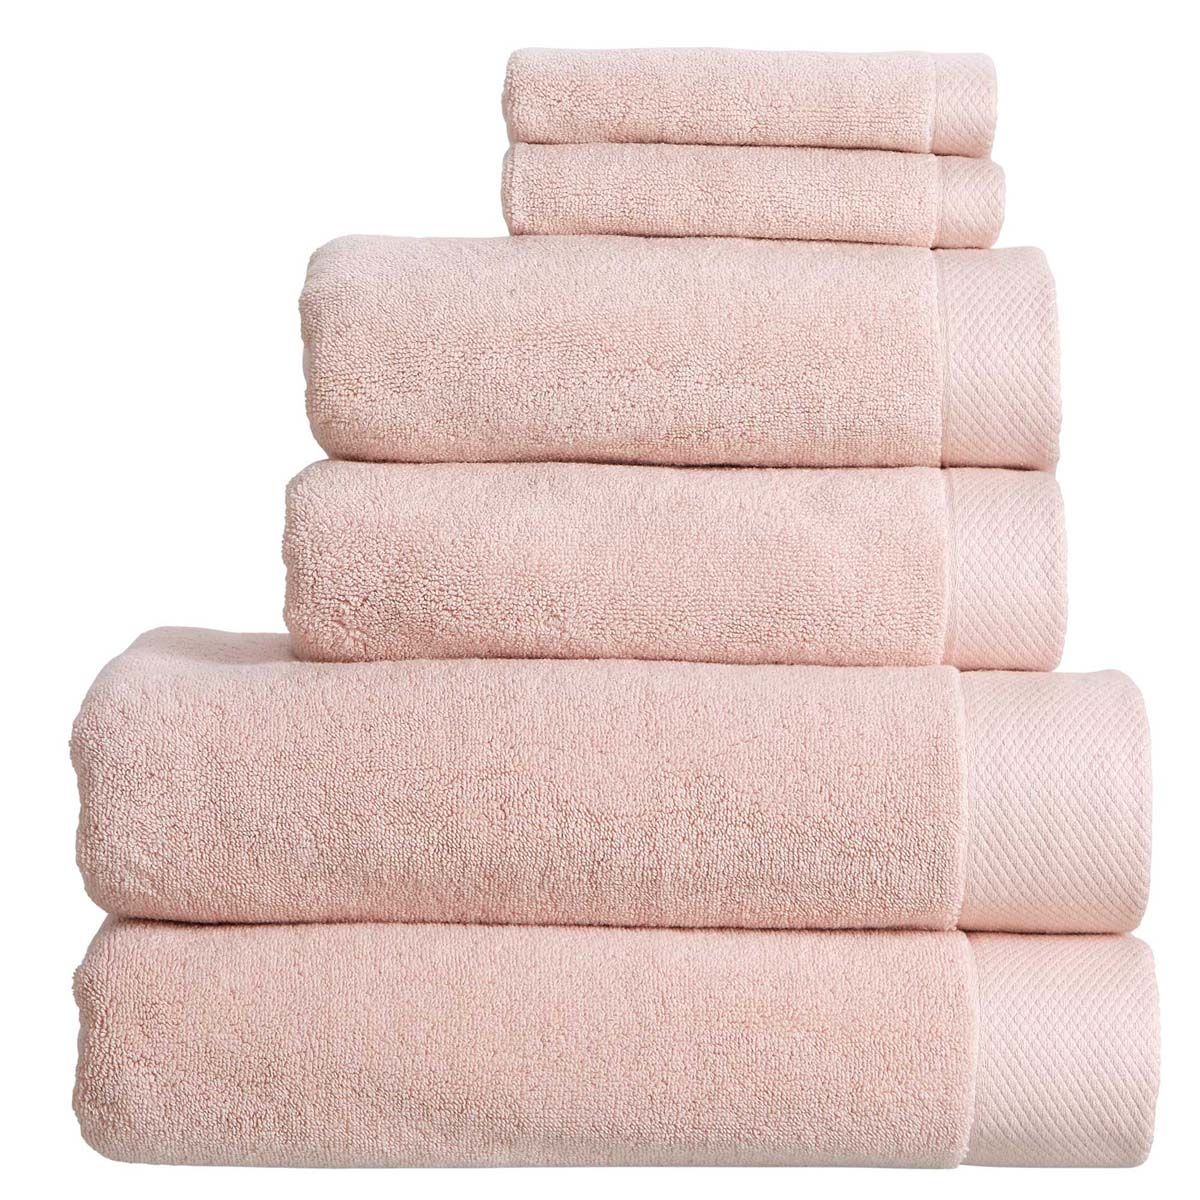 Tata towels. Yay or nay? : r/PollsAndSurveys